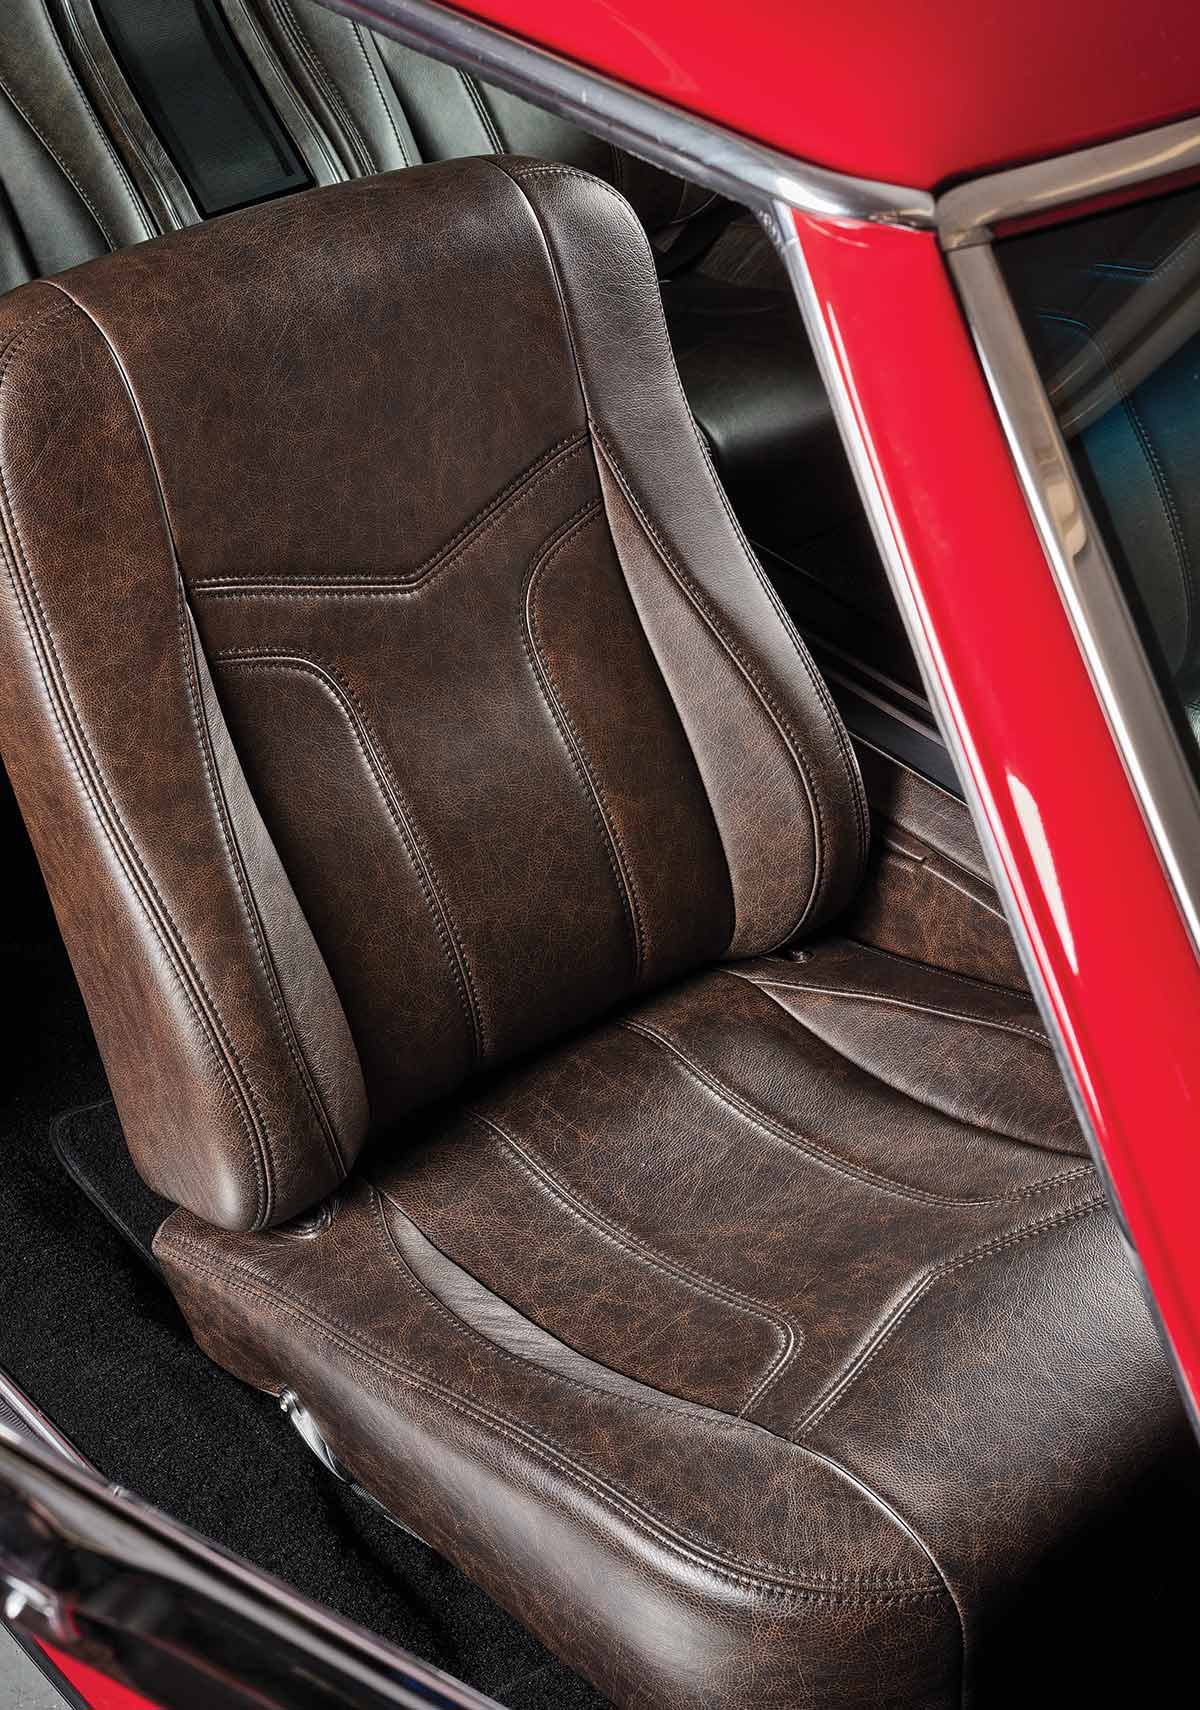 '67 Chevy Chevelle interior seat